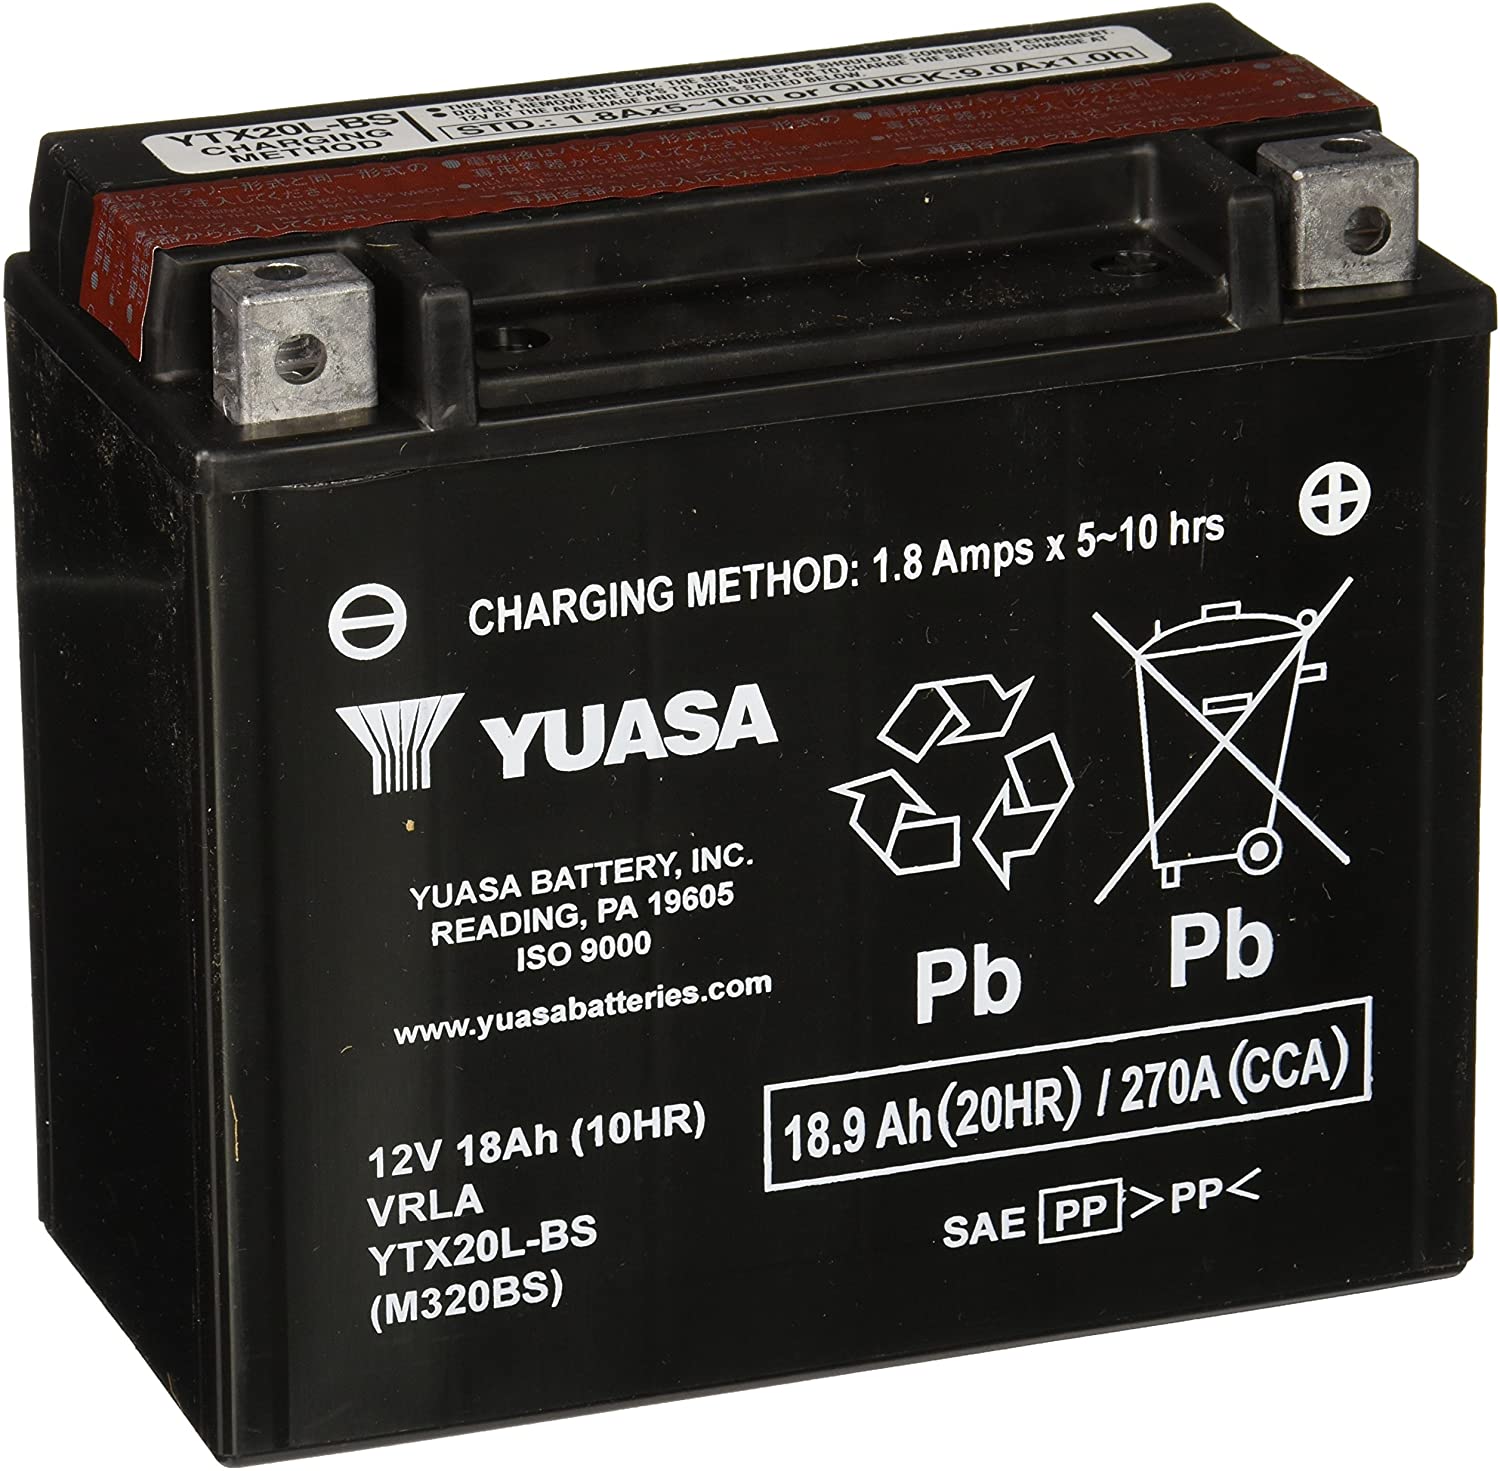 Yuasa YTX20LBS AGM battery review